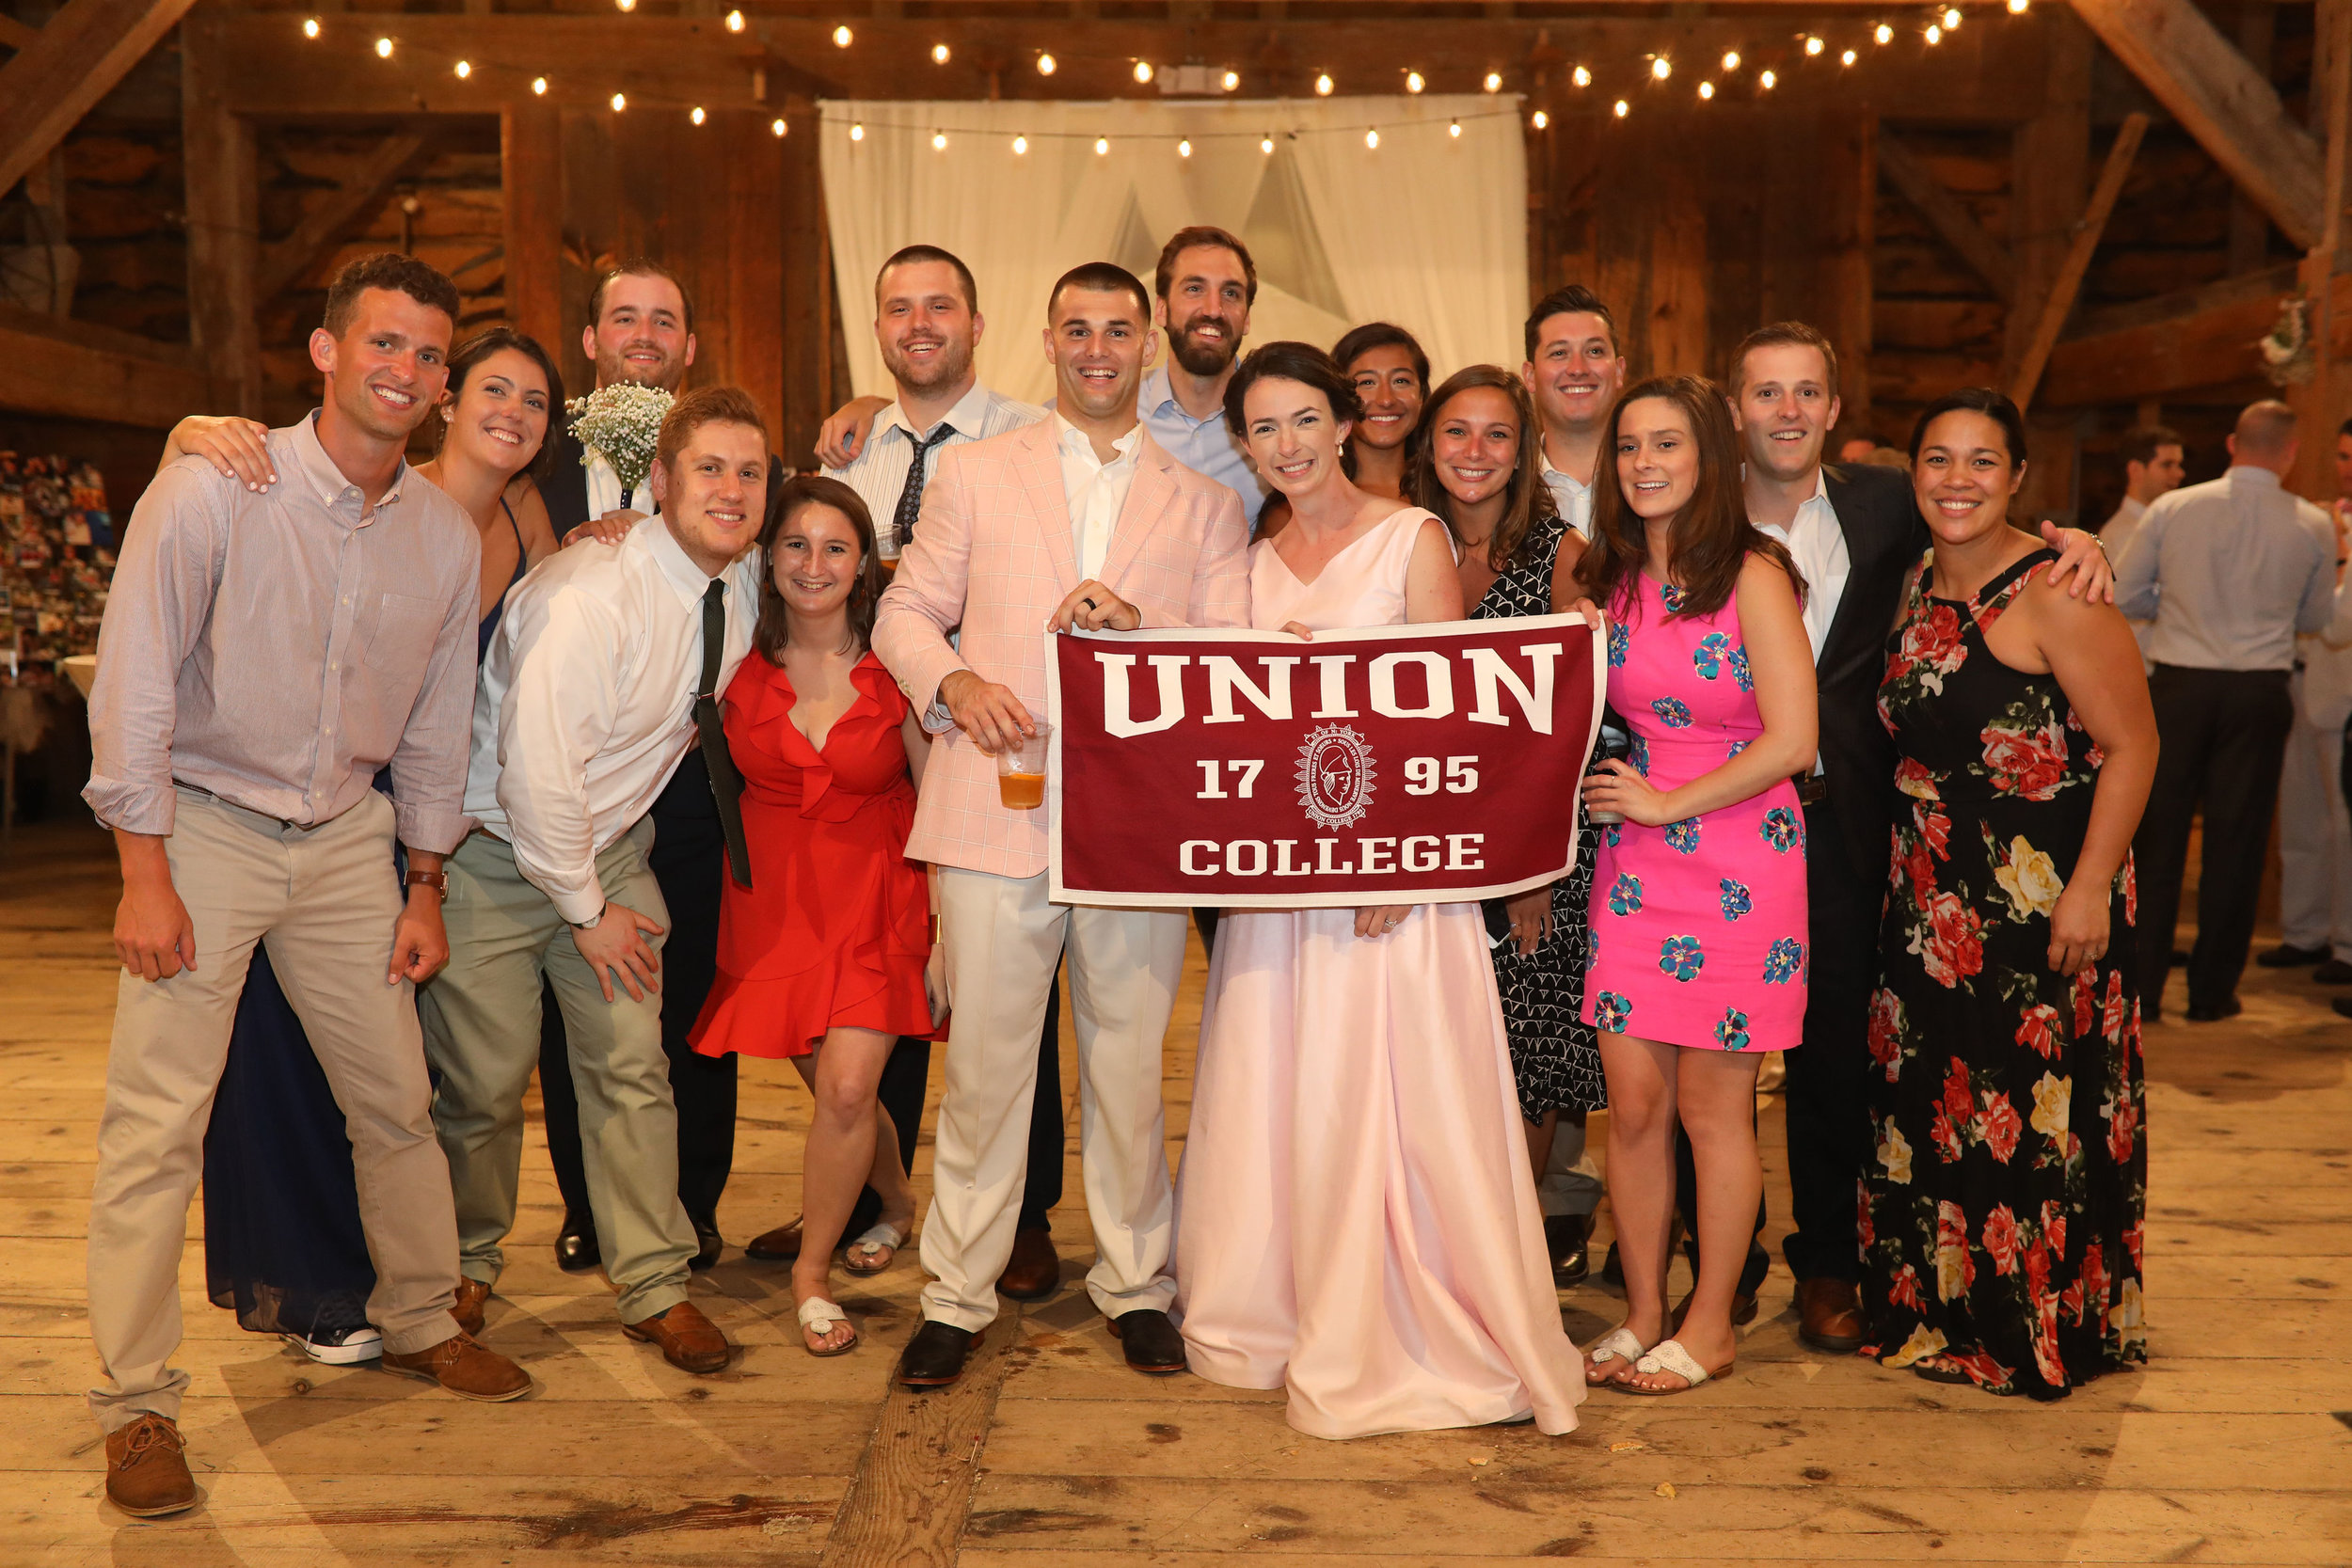 Union_College_Wedding_0155.jpg